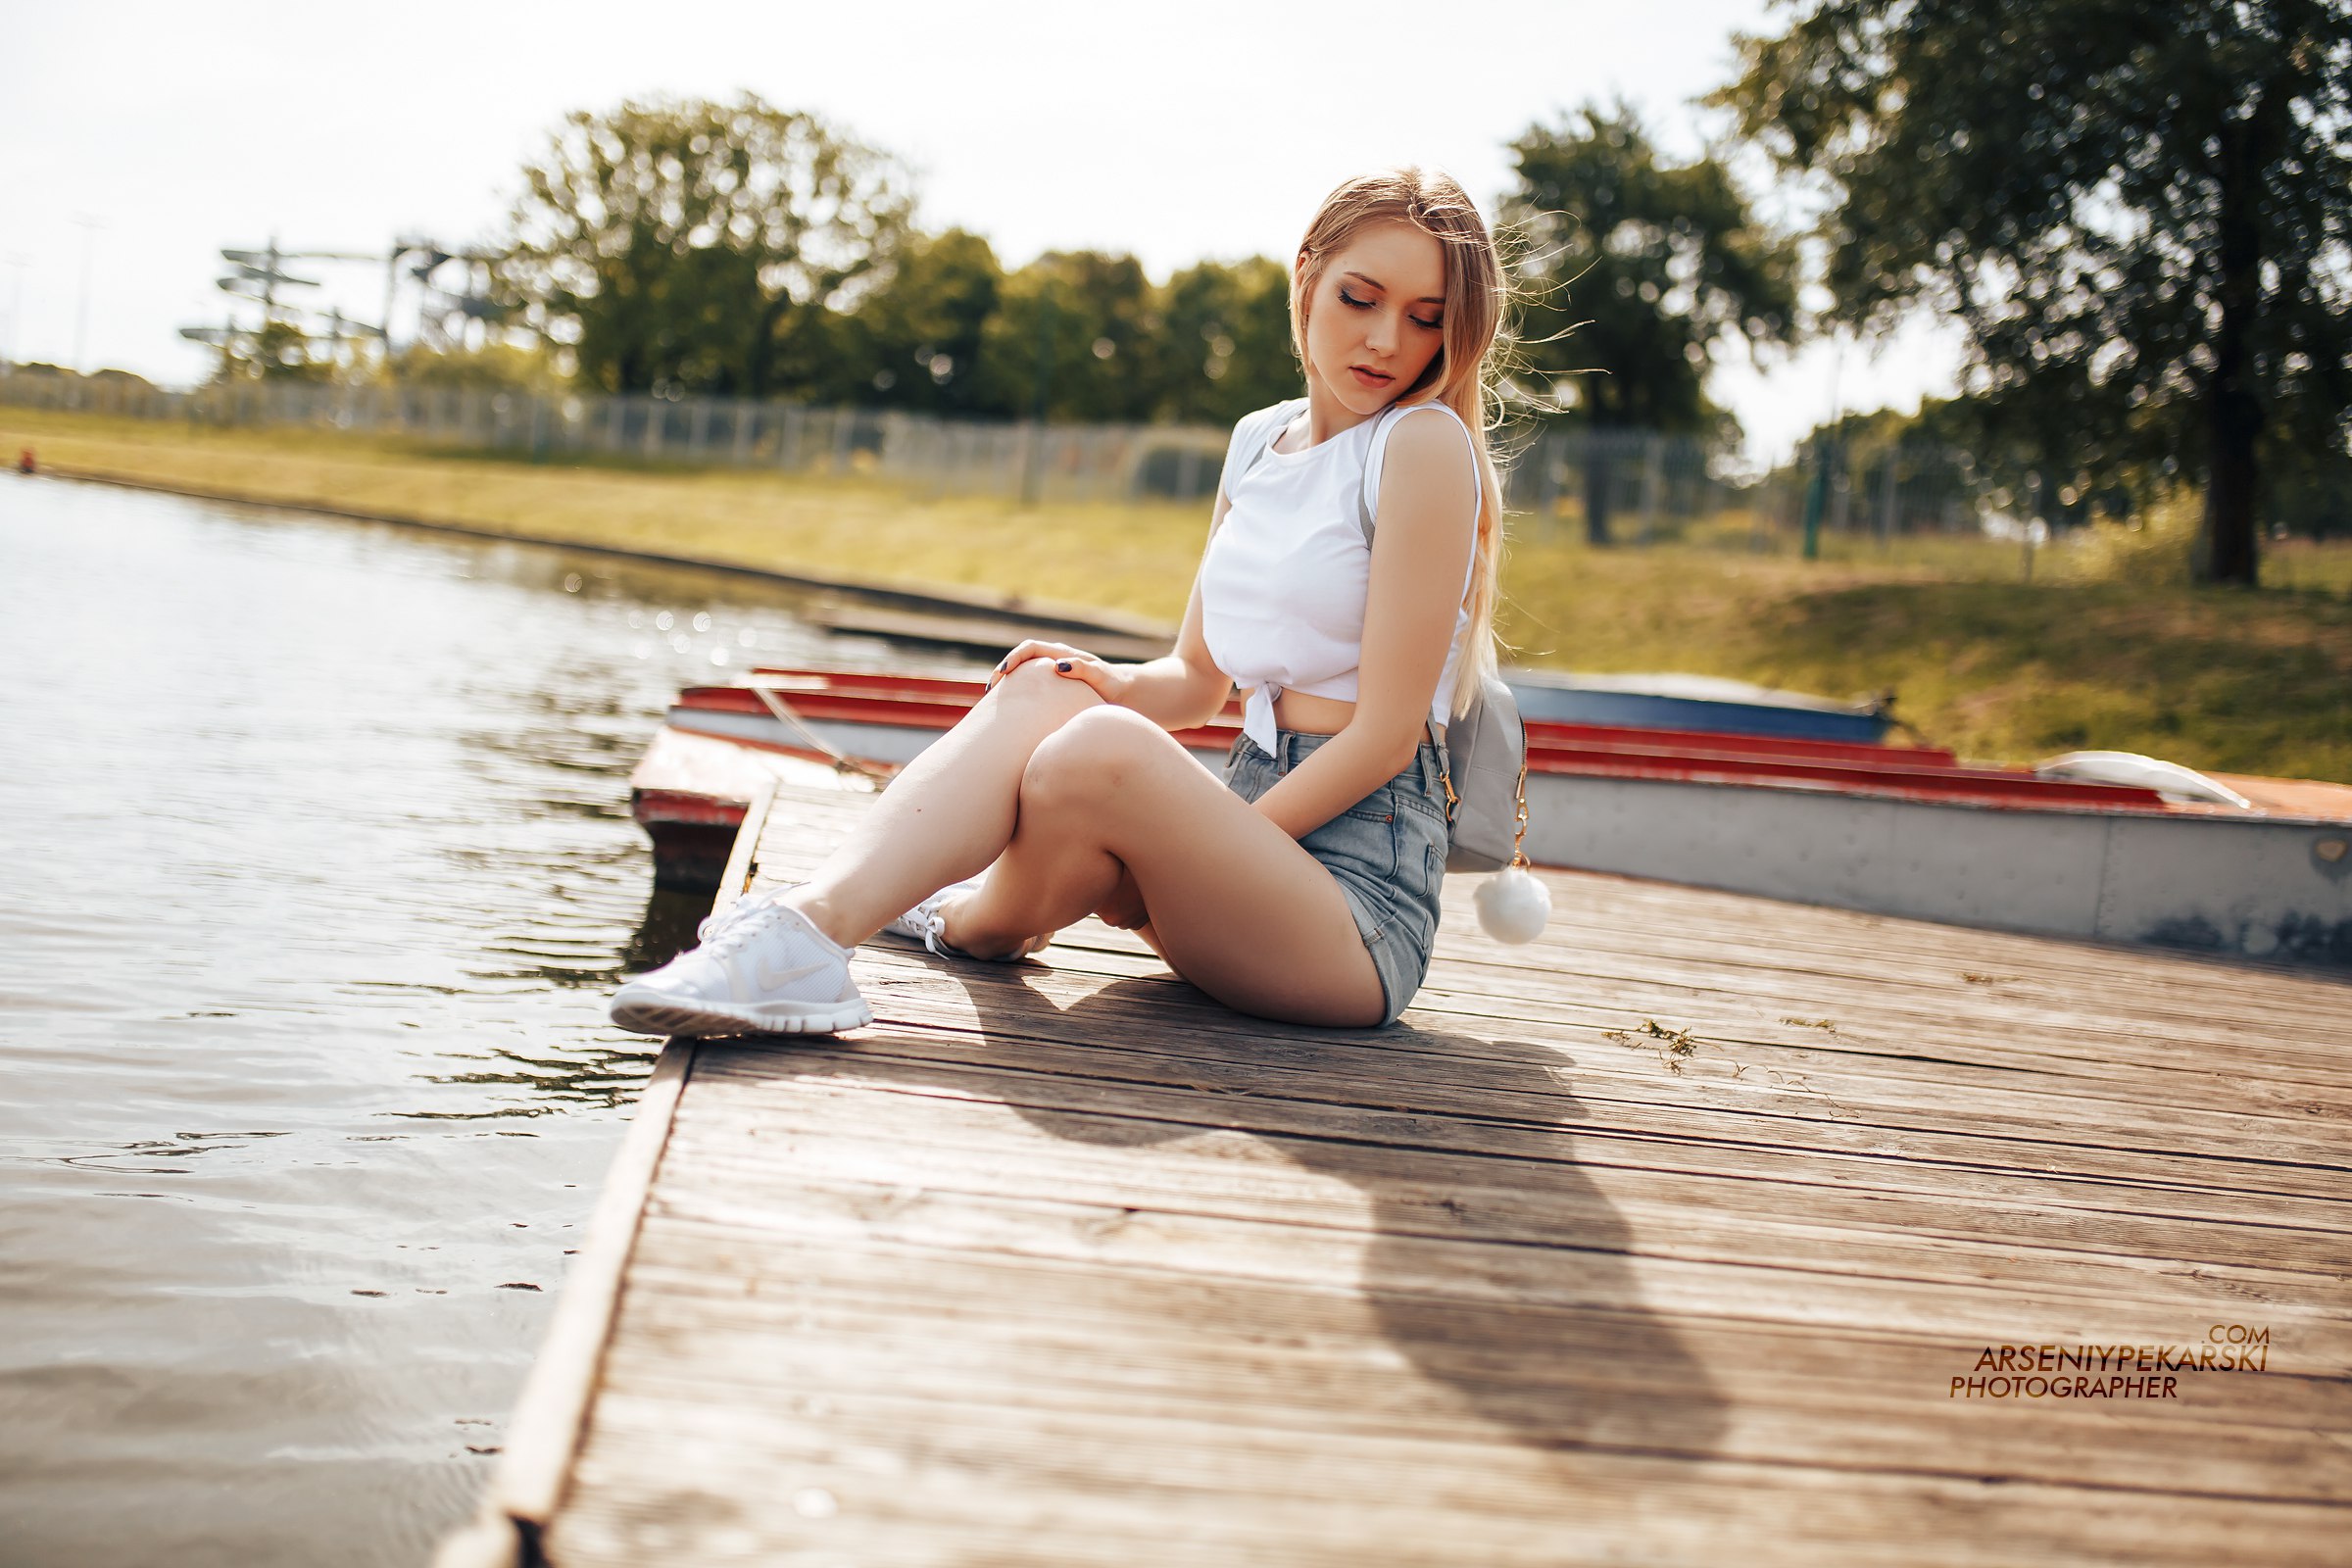 People 2400x1600 women blonde sitting pier sneakers Nike boat handbags women outdoors water portrait painted nails jean shorts